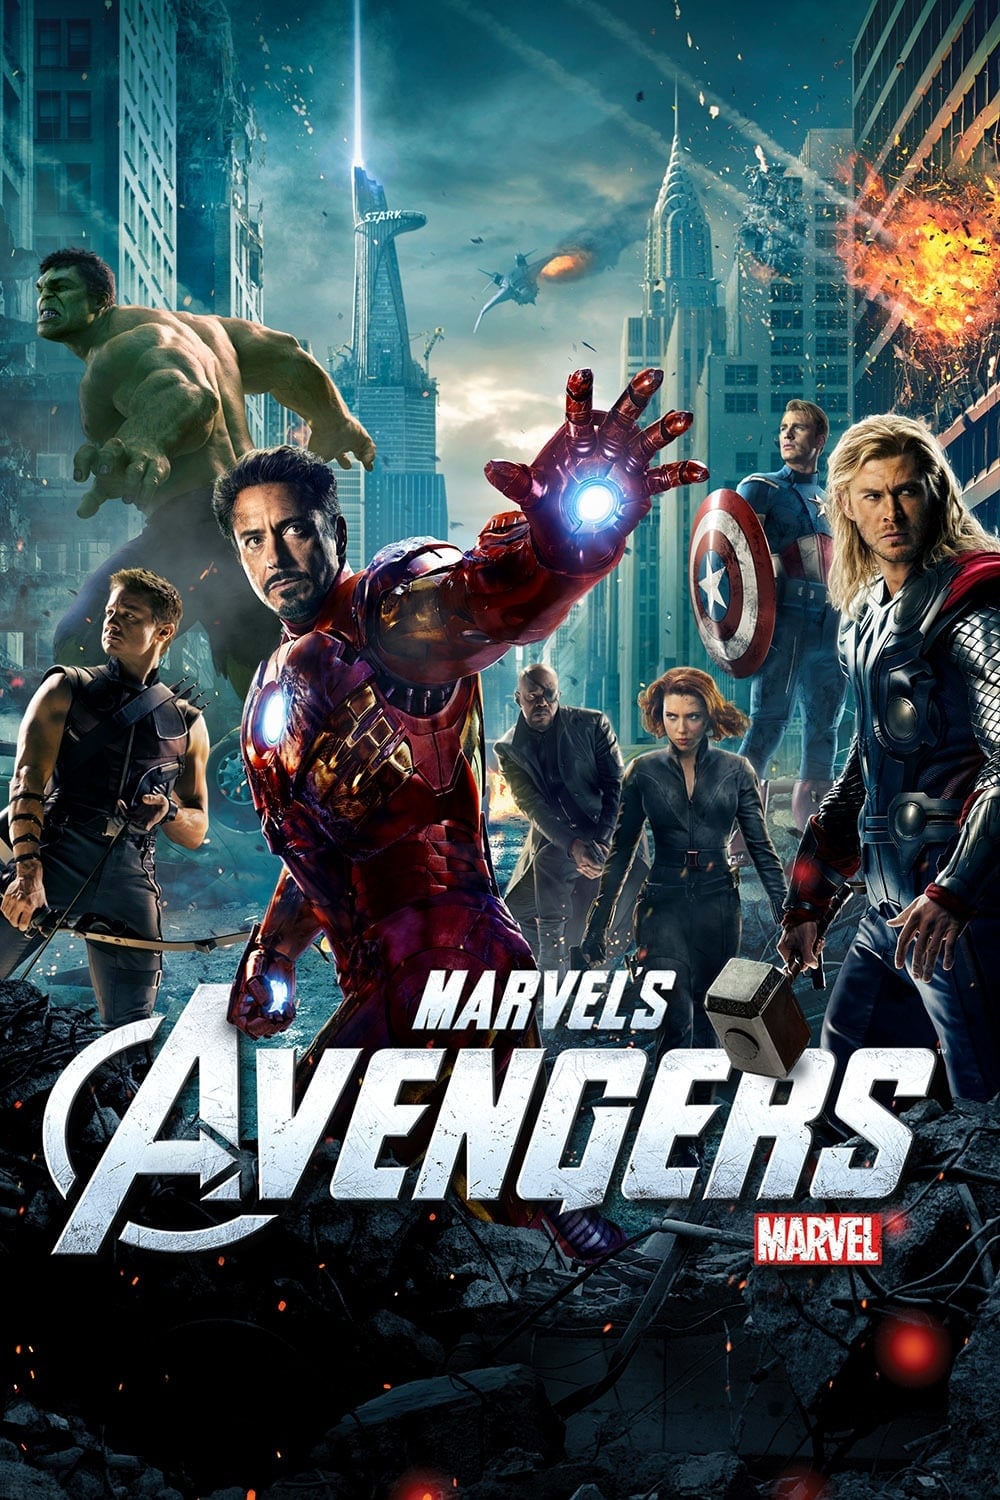 Affiche du film "Avengers"